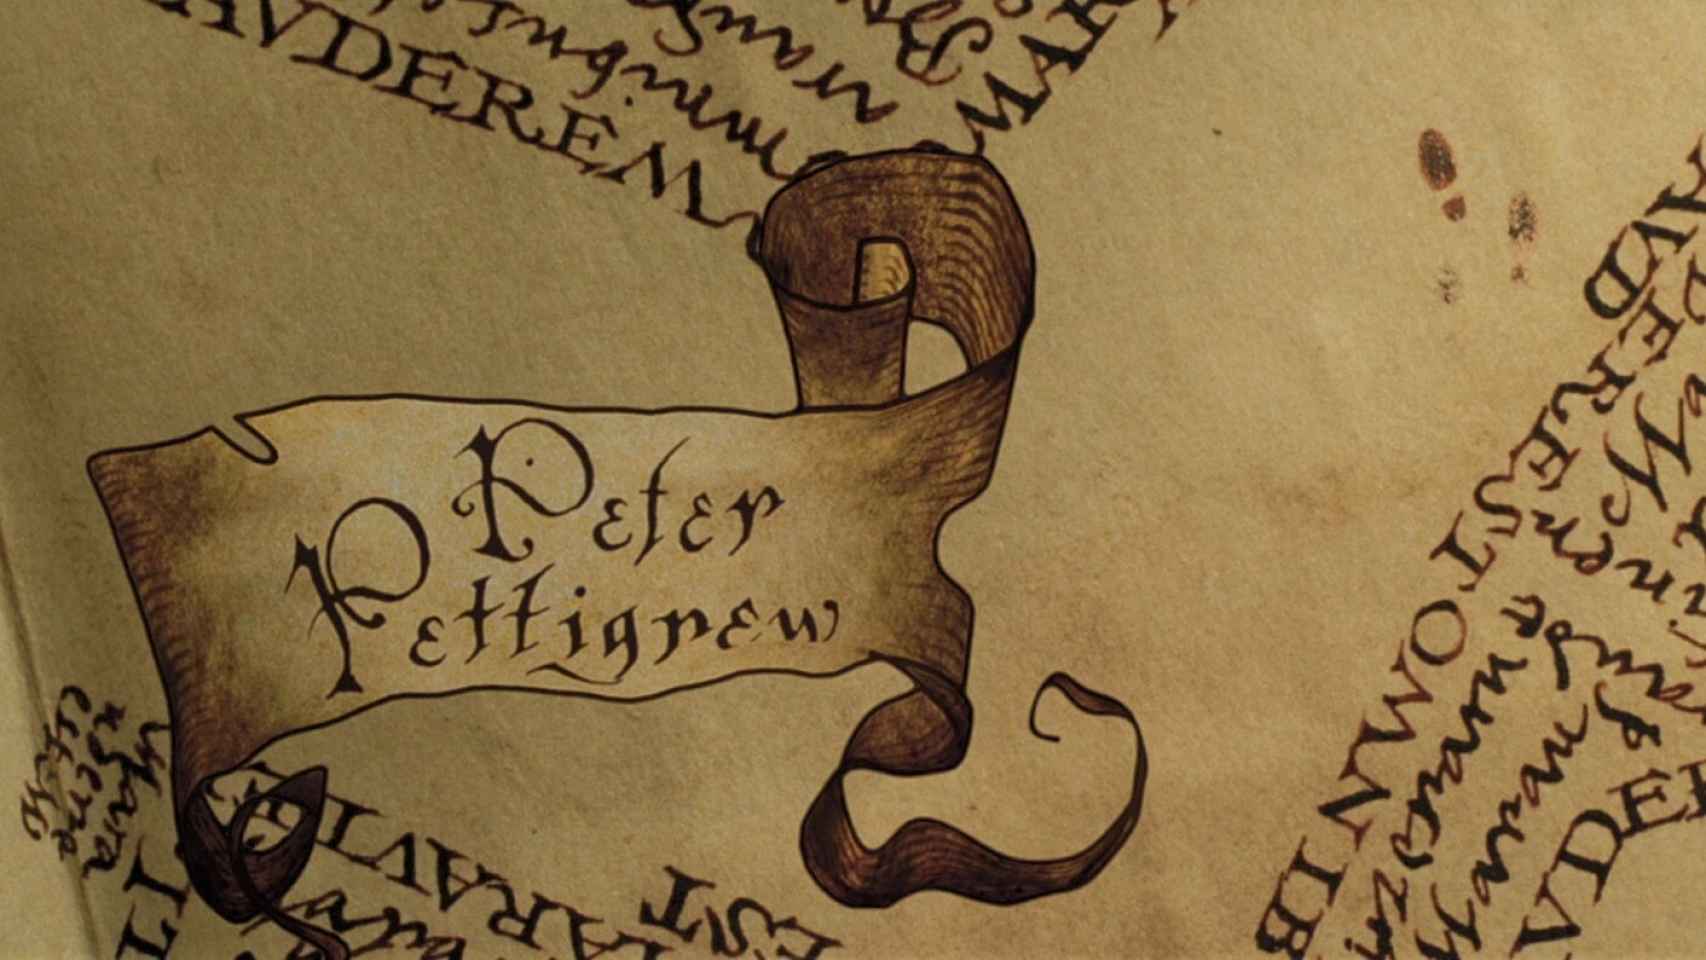 El mapa de los merodeadores apareció en el tercer libro de la saga de Harry Potter.